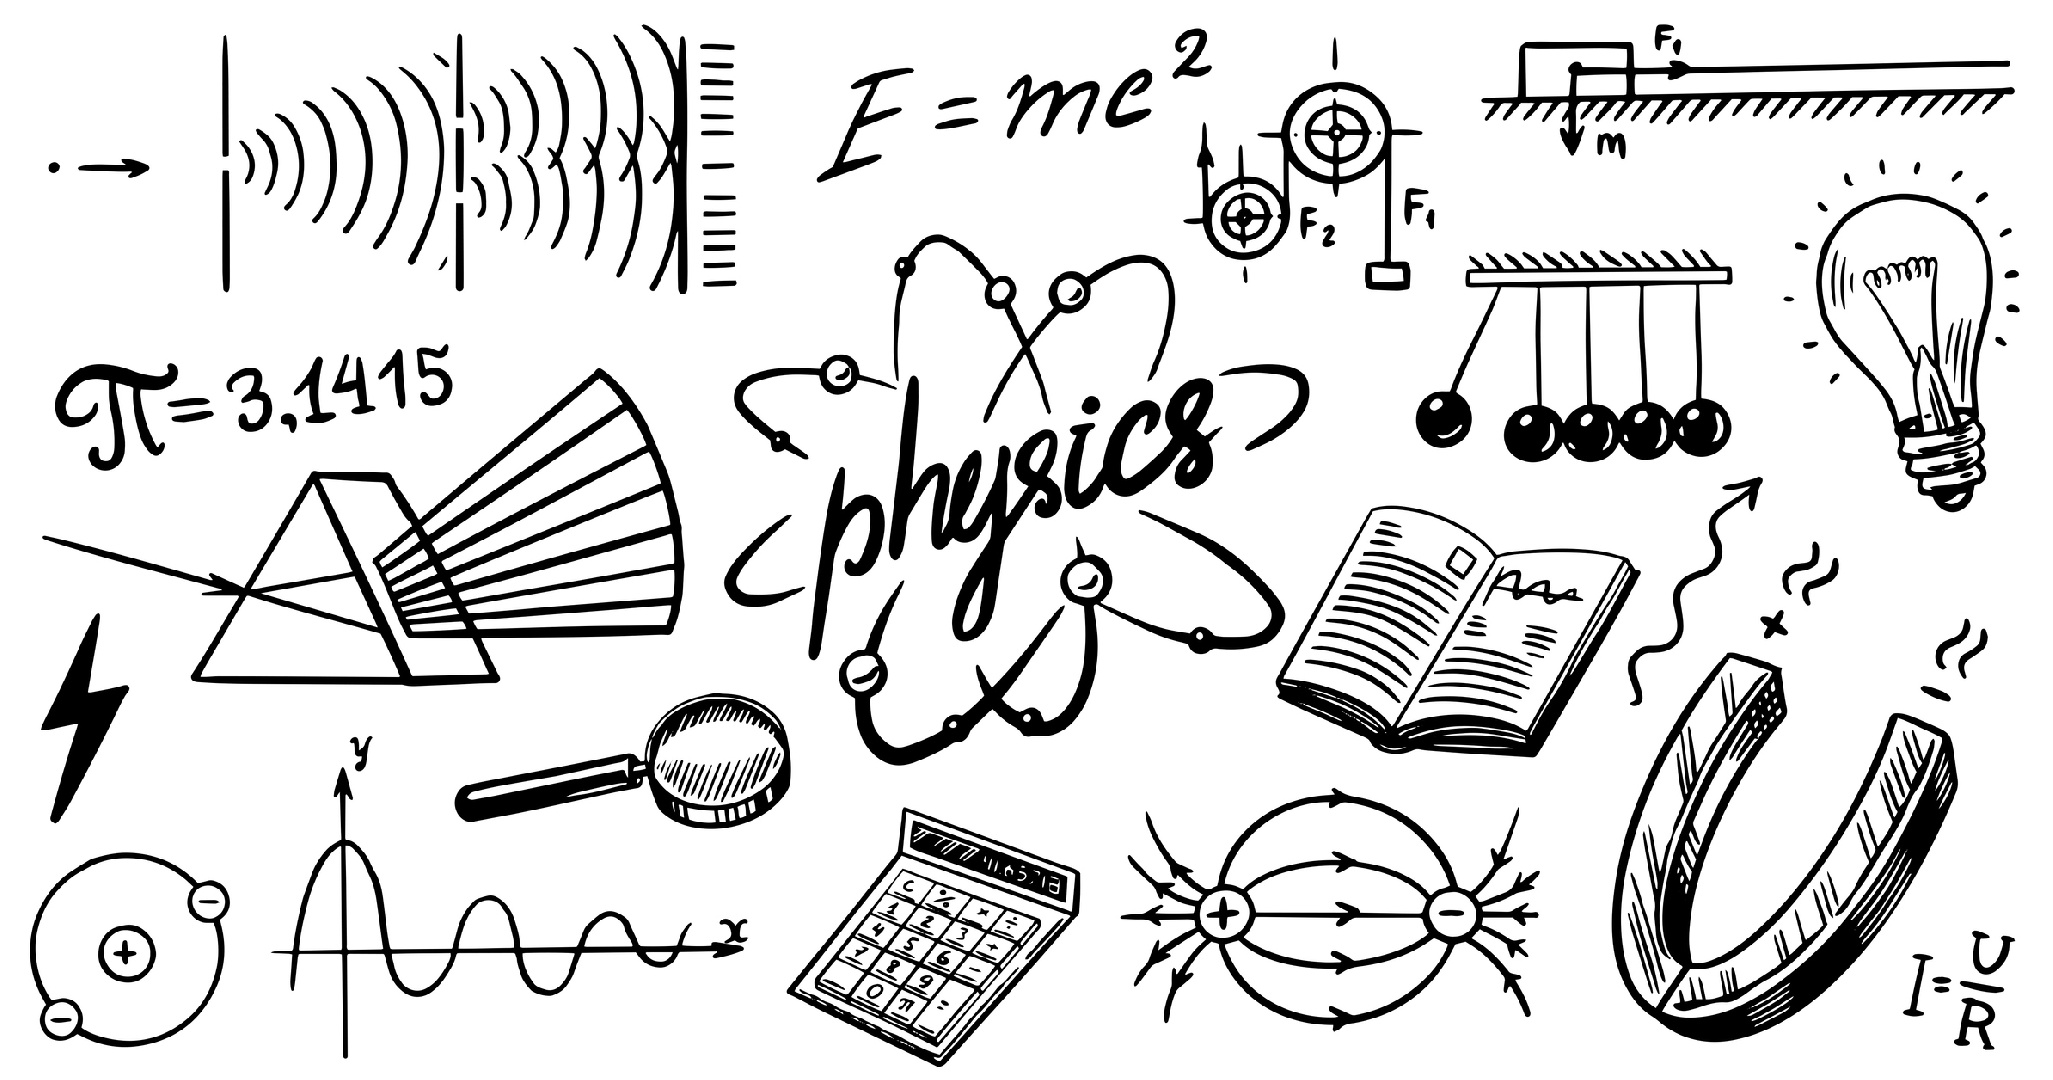 Рисунки по физике 10 класс. Физика картинки. Физика вектор. Физика векторные изображения. Рисунки связанные с физикой.